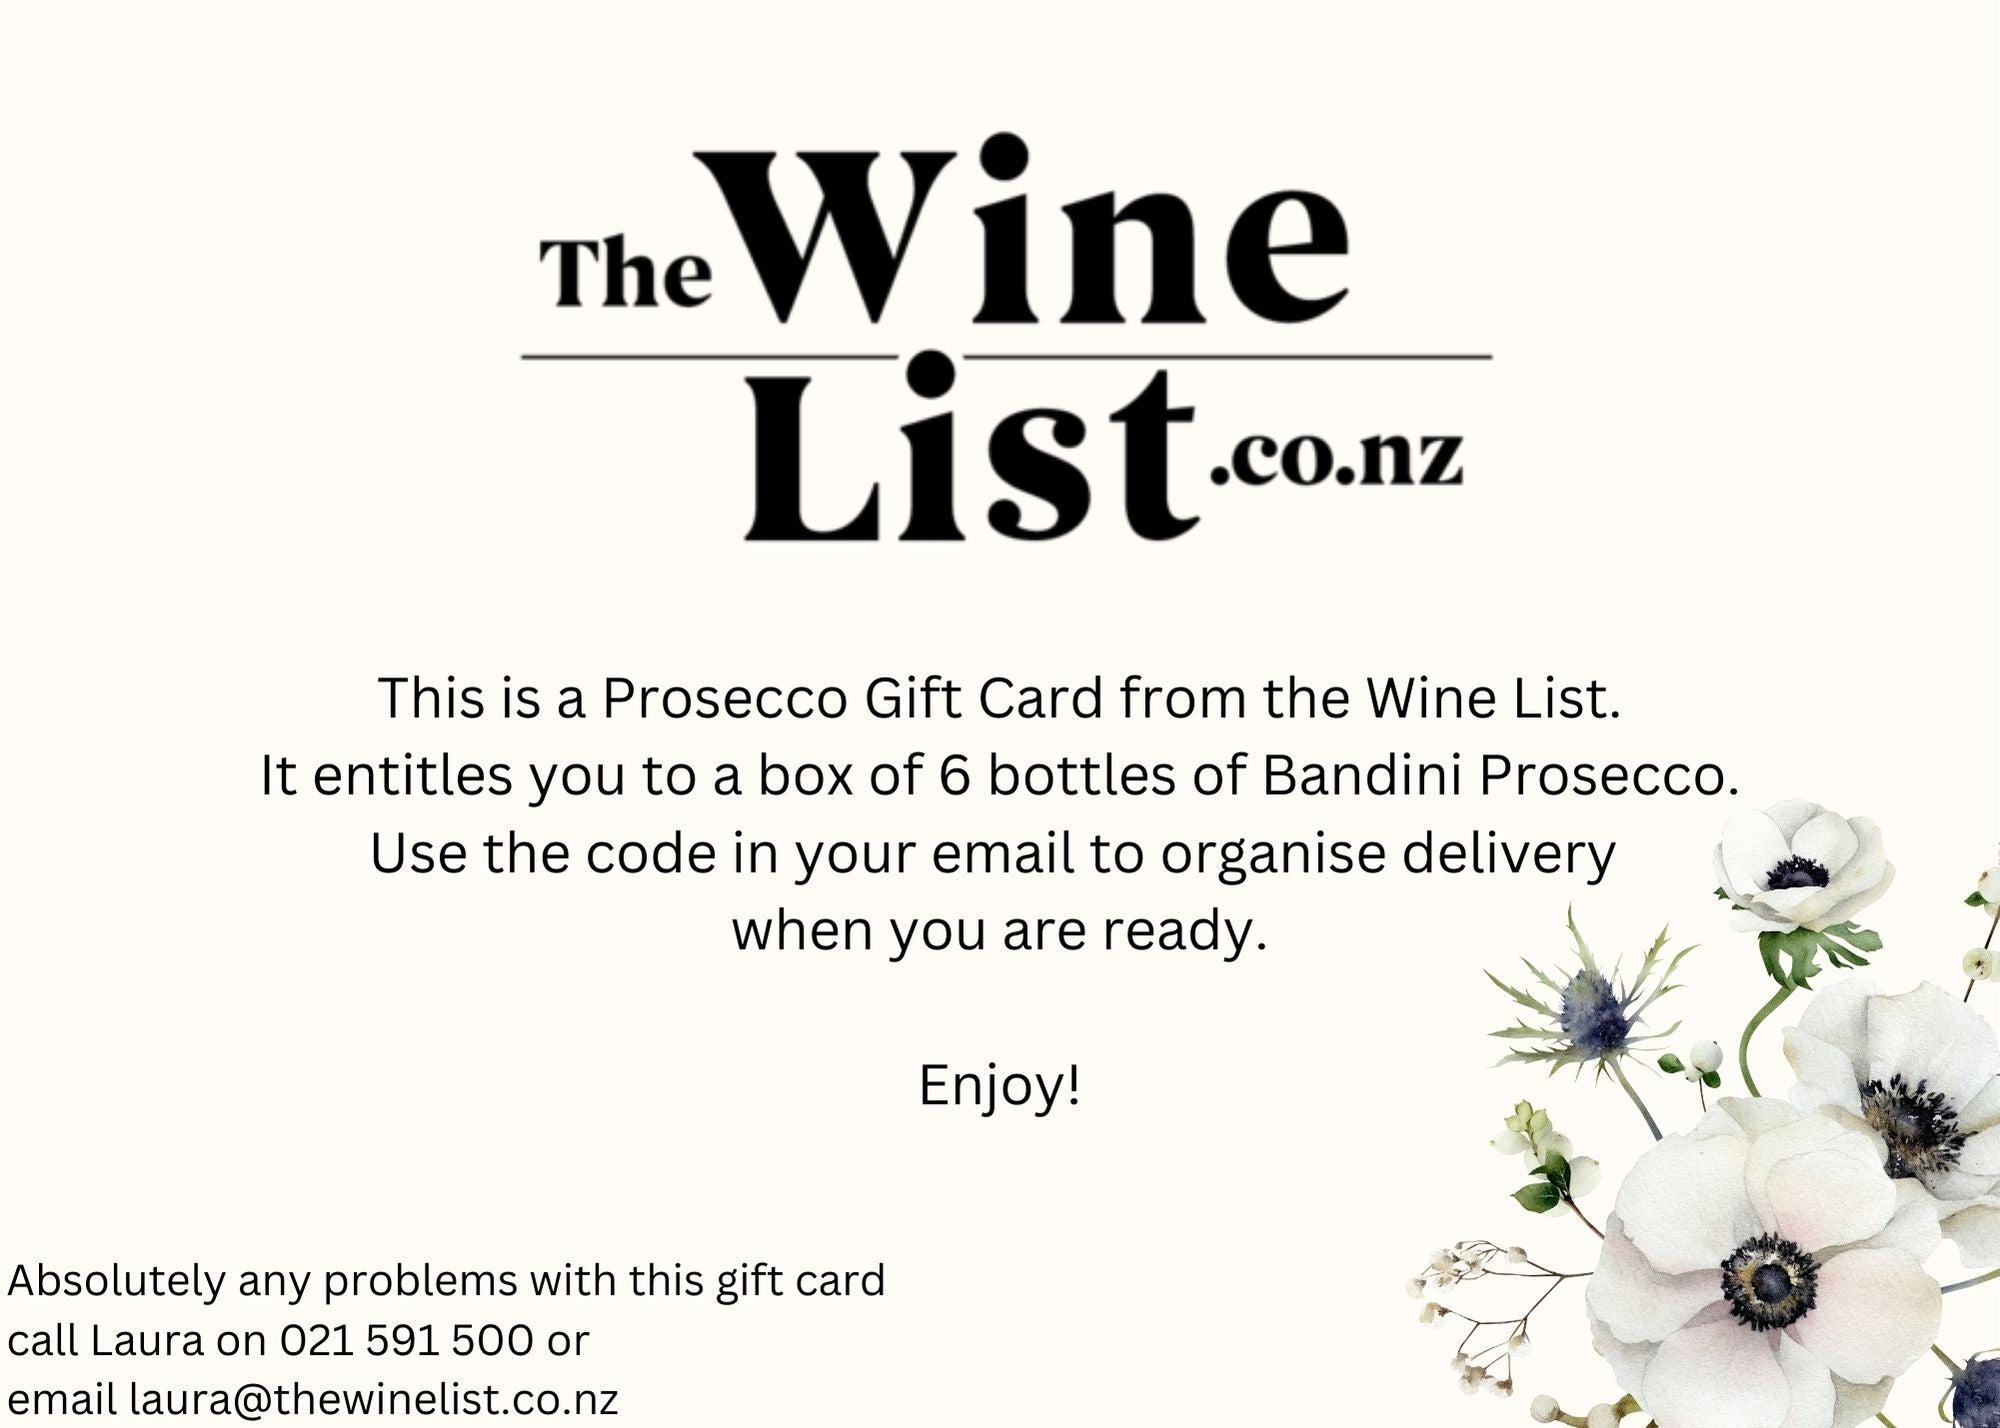 The Wine List Prosecco Gift Card